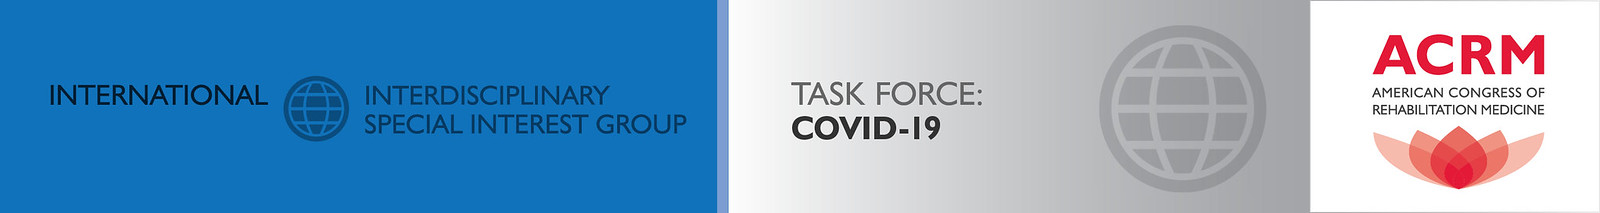 ACRM COVID-19 Task Force header